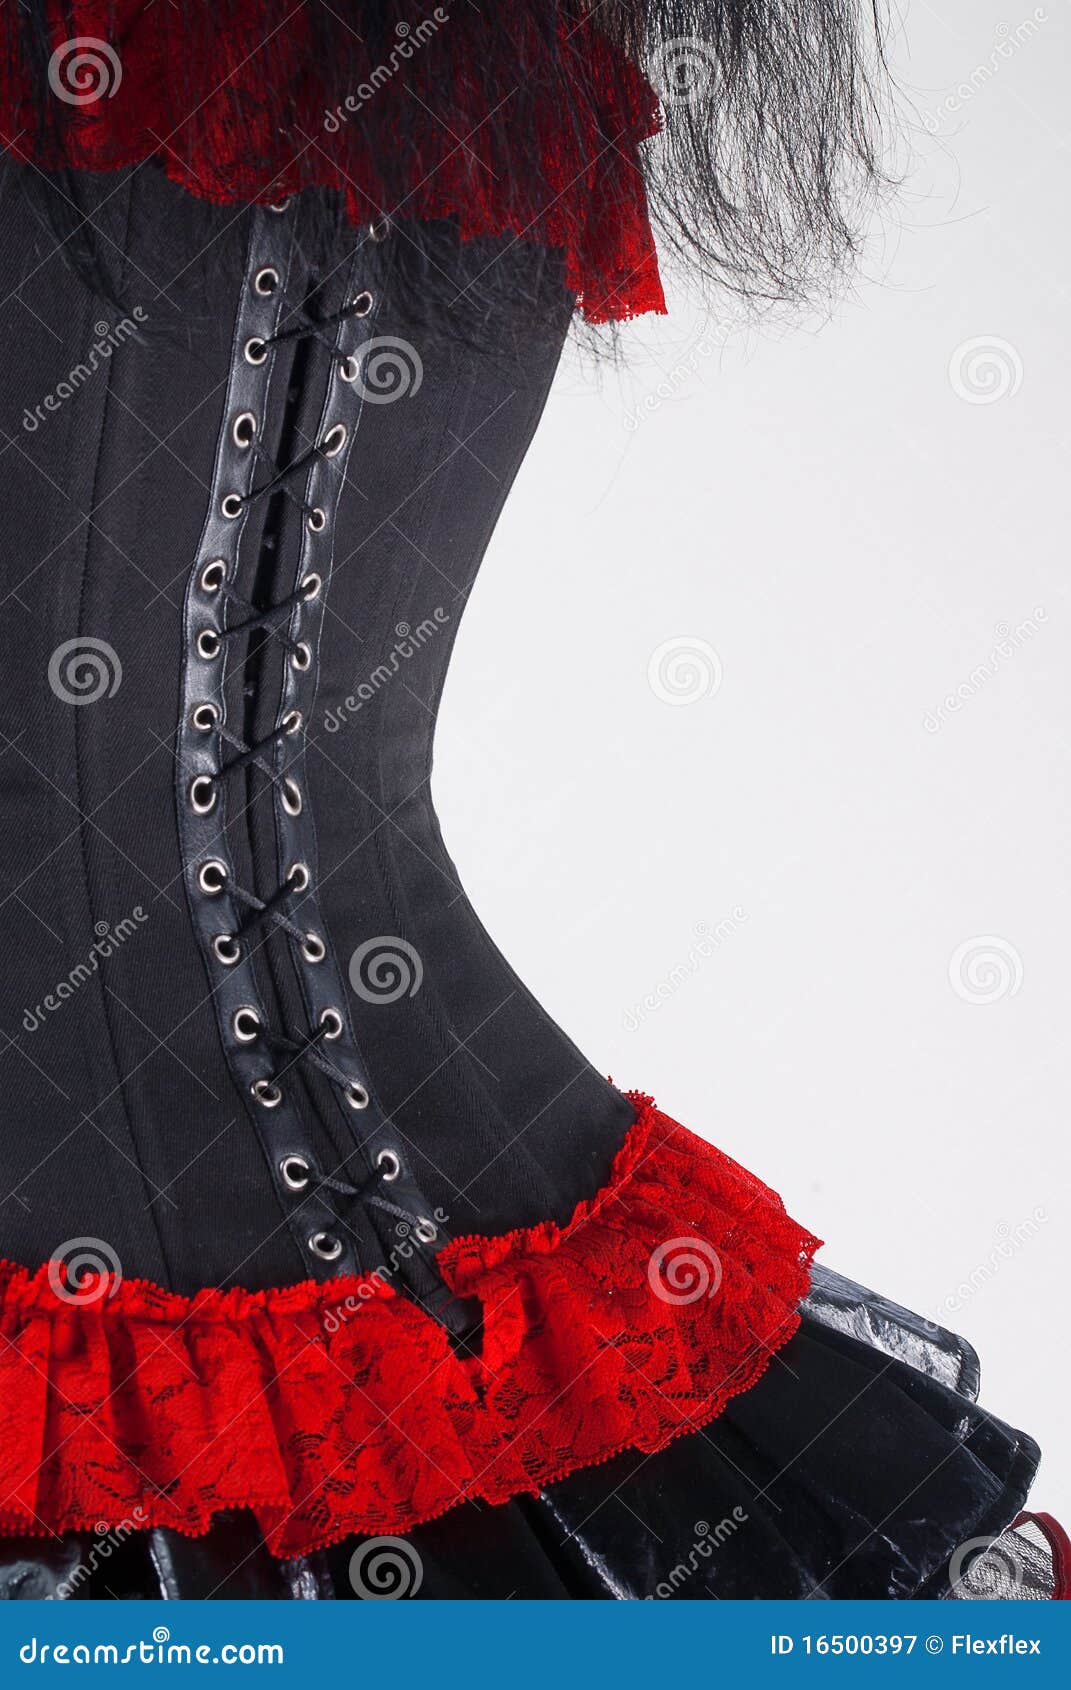 https://thumbs.dreamstime.com/z/black-red-gothic-corset-16500397.jpg